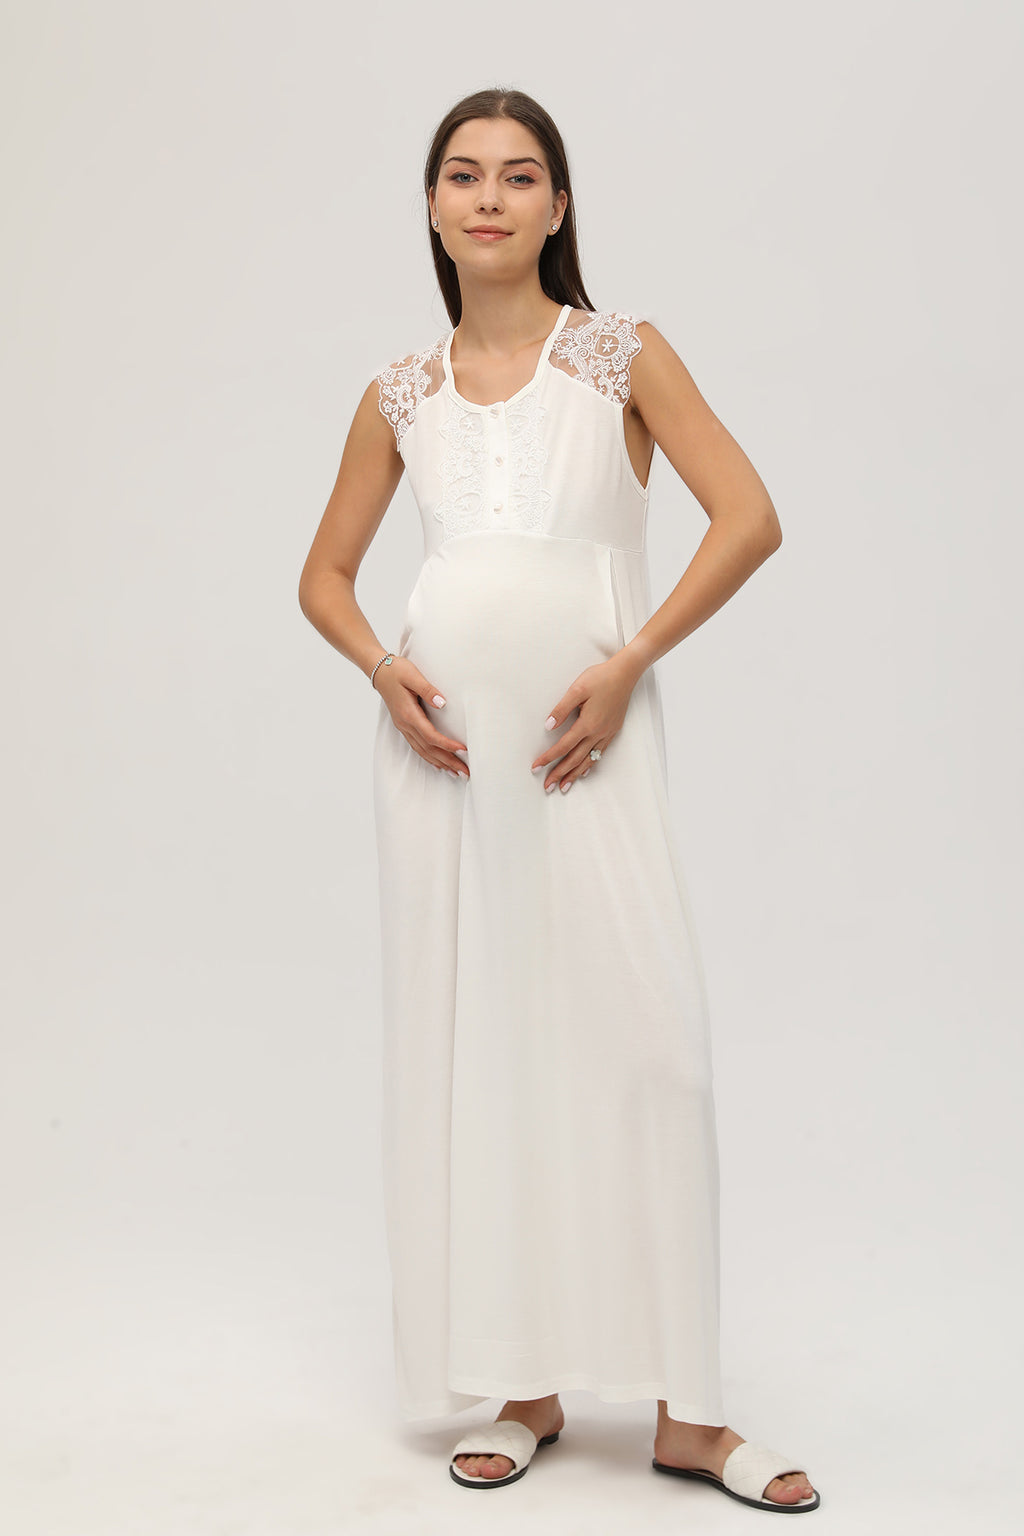 Shopymommy 55104 Dream Lace Collar Maternity & Nursing Nightgown Blue